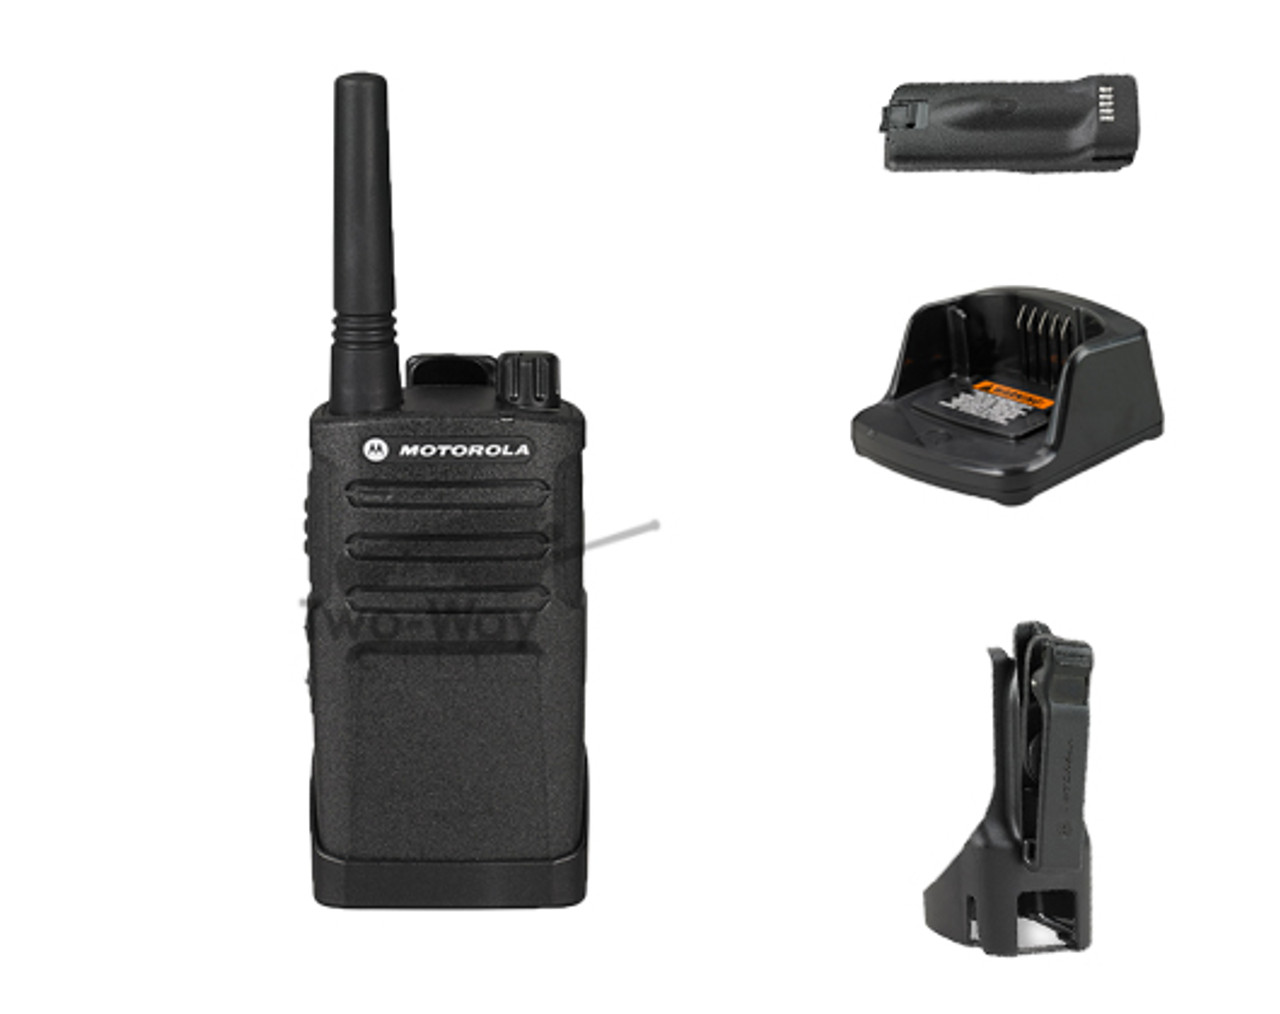 Pack of Motorola RMU2040 Business Two-Way Radio Watts Channels Military Spec 20 Floor Range - 2